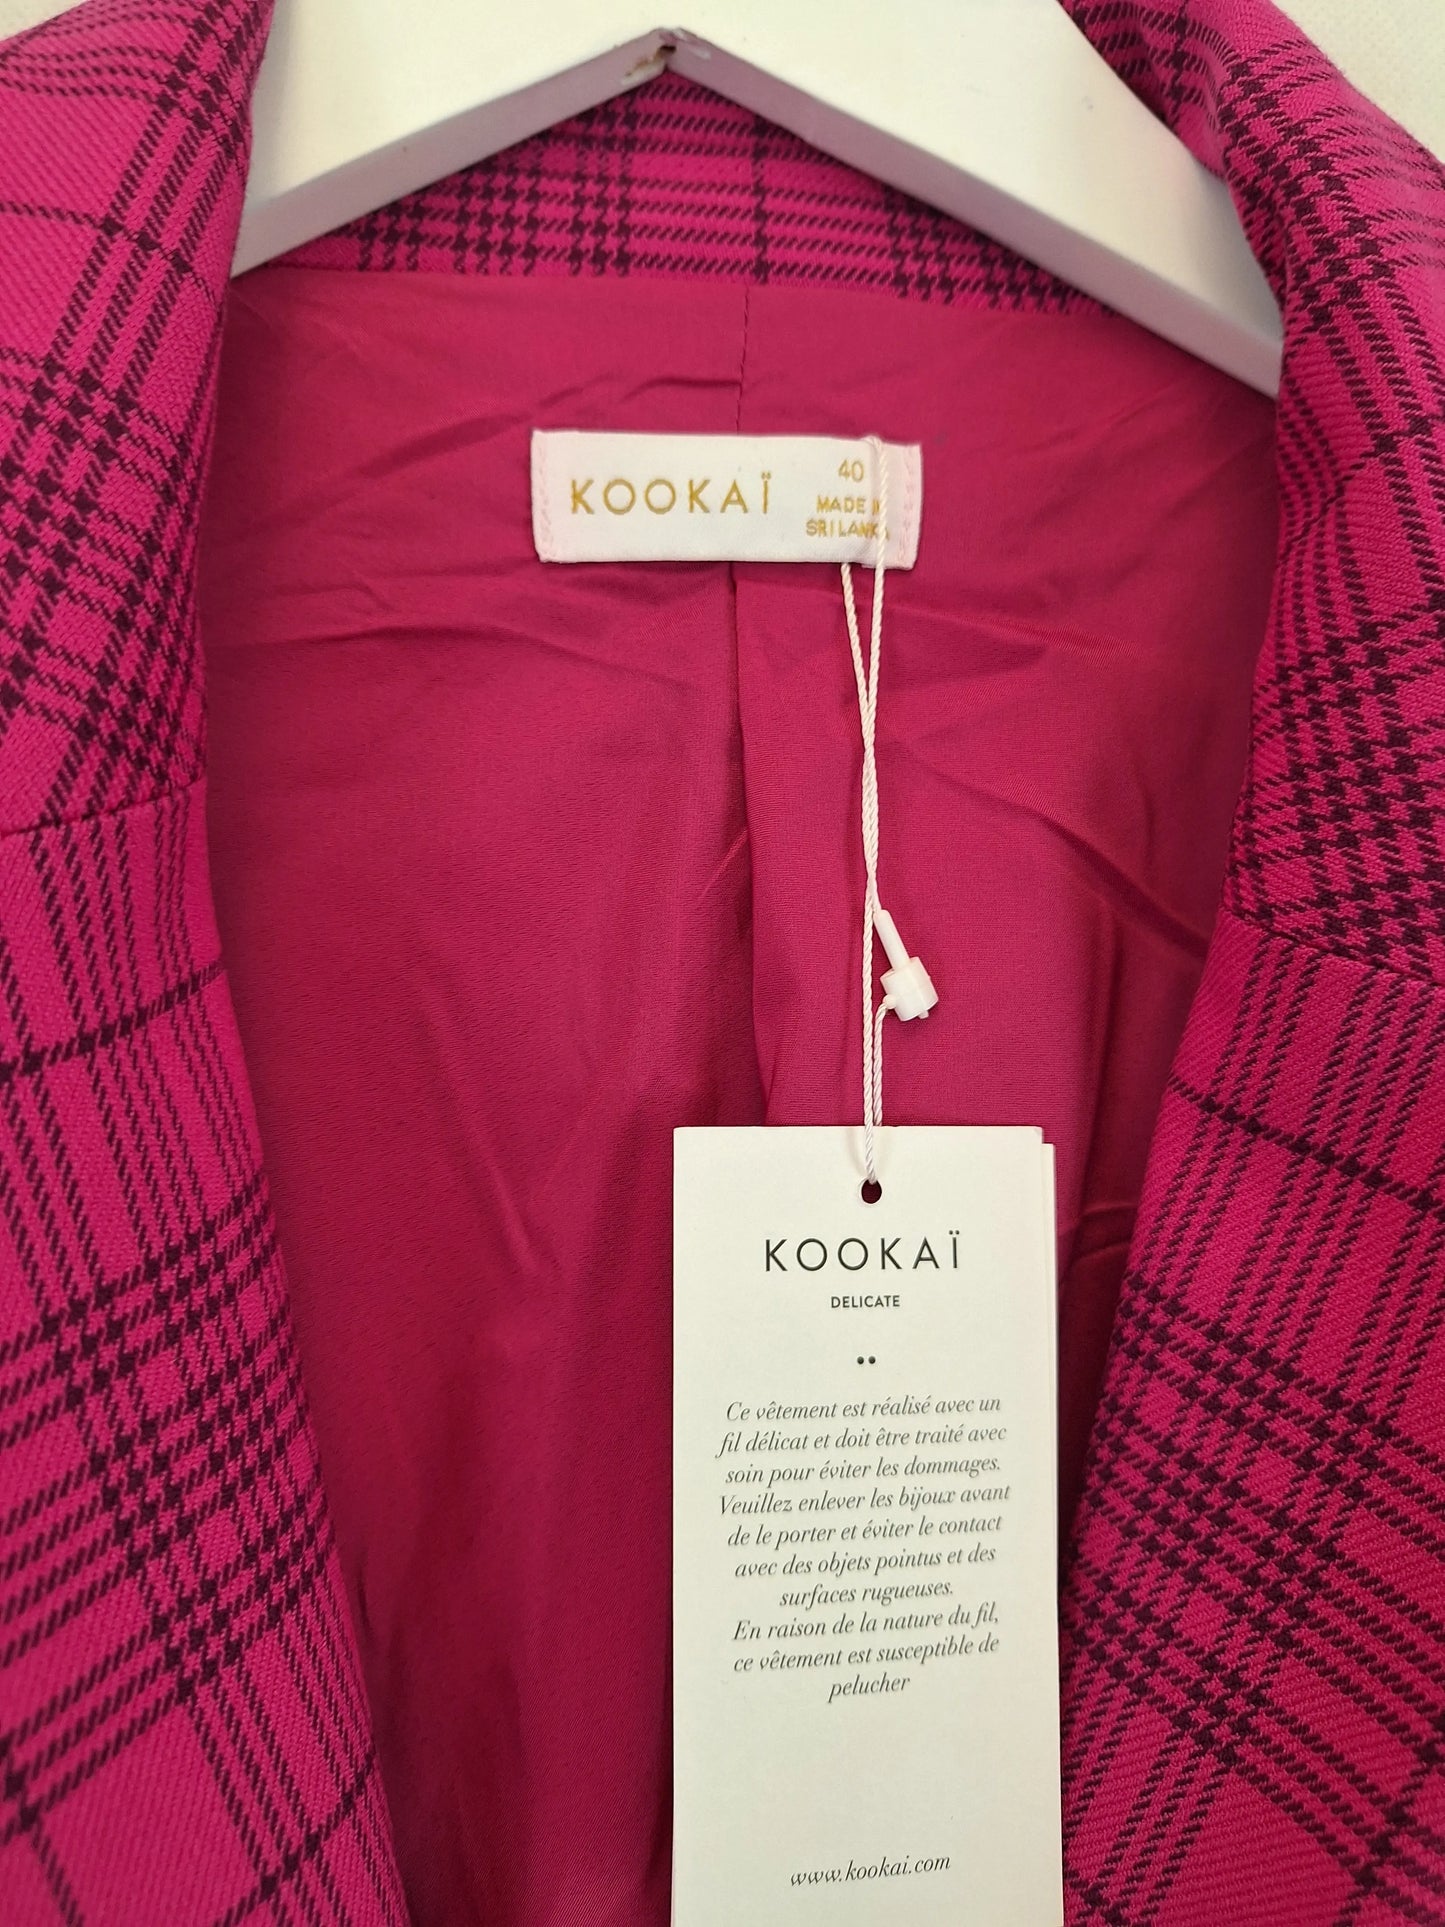 Kookai Verona Check Tailored Blazer Size 12 by SwapUp-Online Second Hand Store-Online Thrift Store